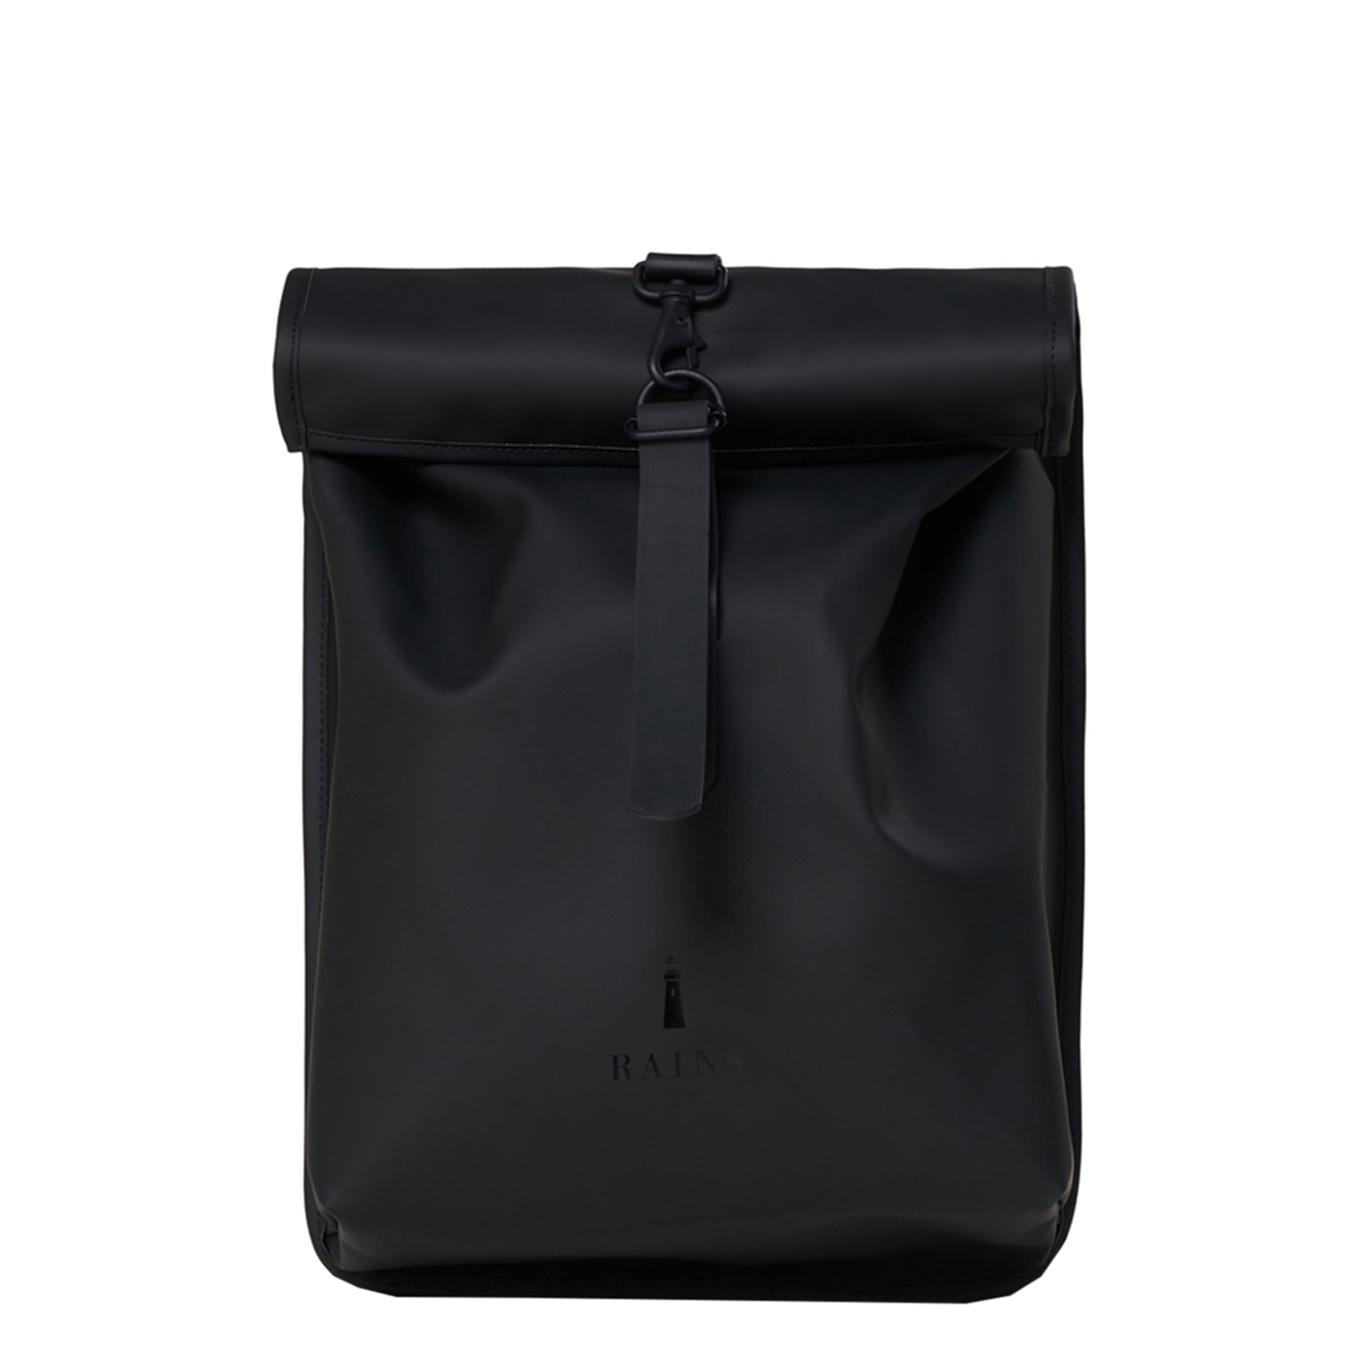 Rains Rolltop Mini black backpack